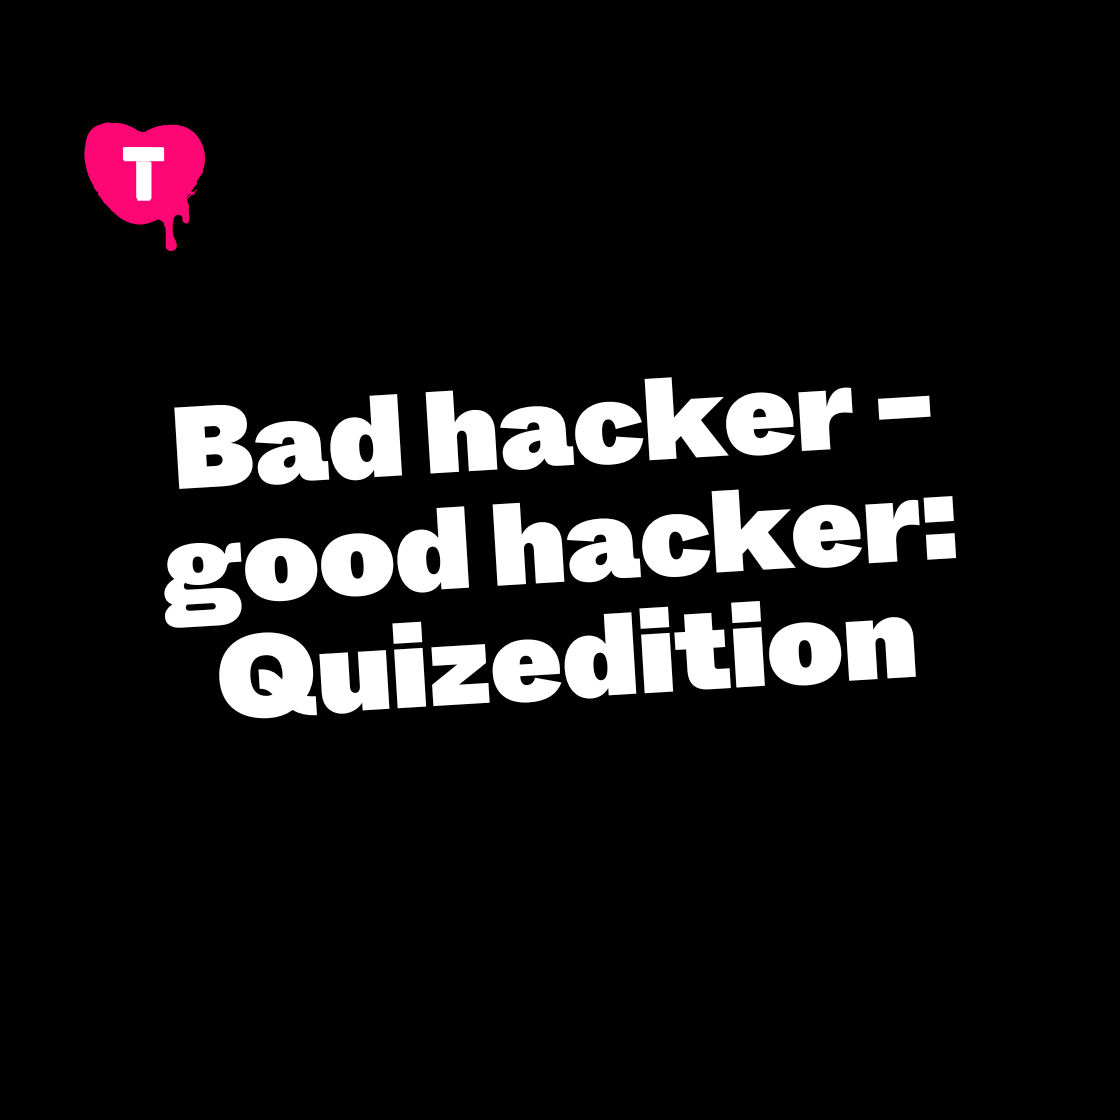 Bad hacker - good hacker